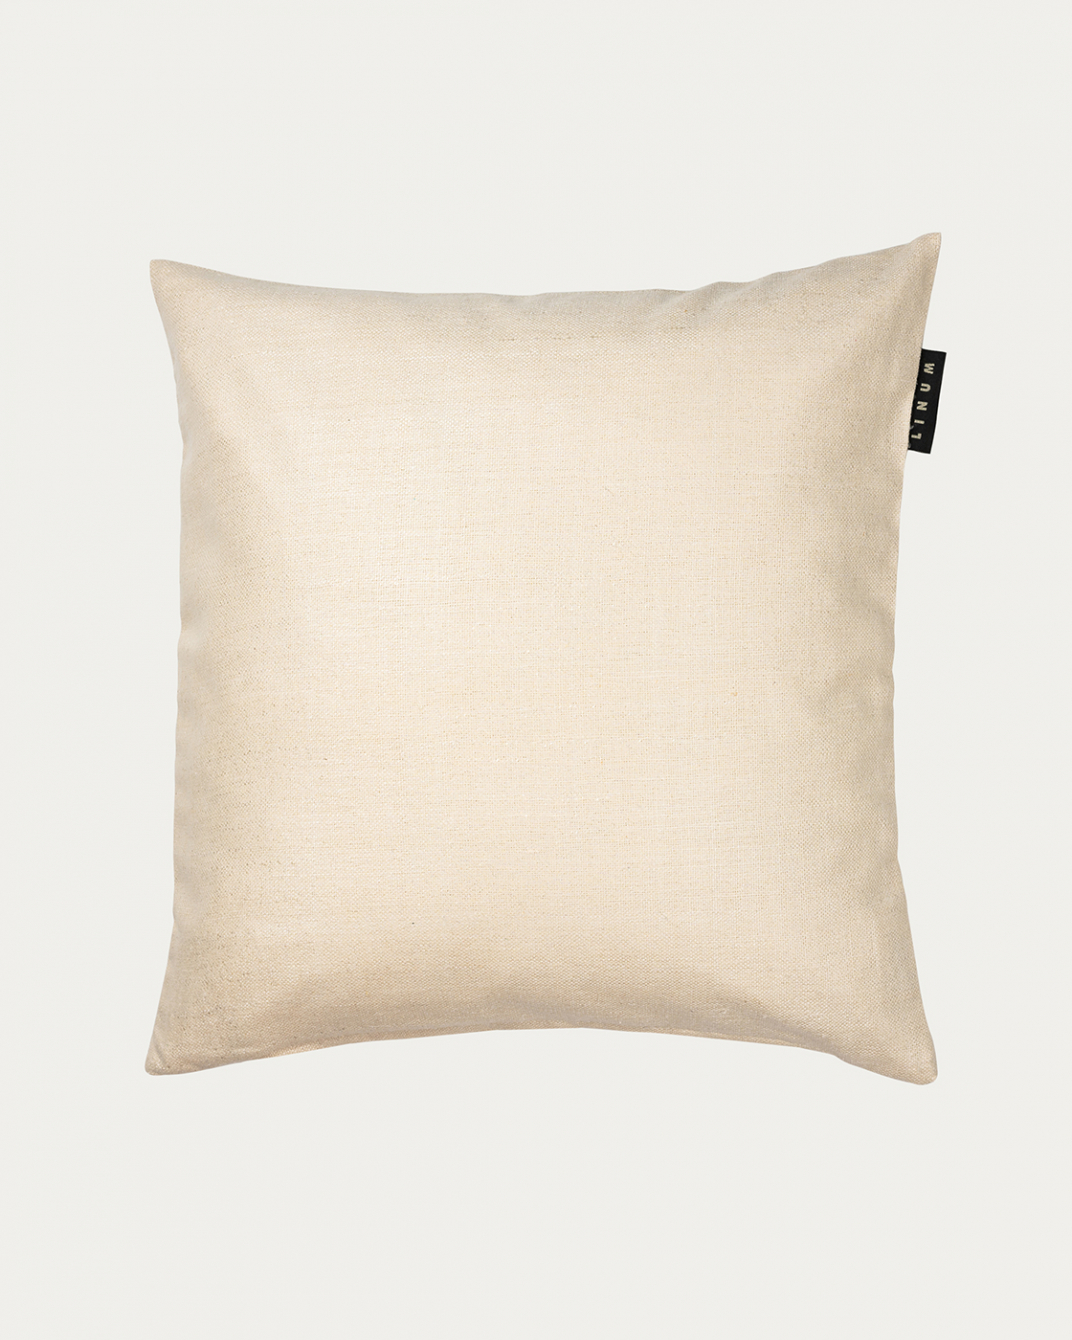 SETA Cushion cover 50x50 cm Light beige